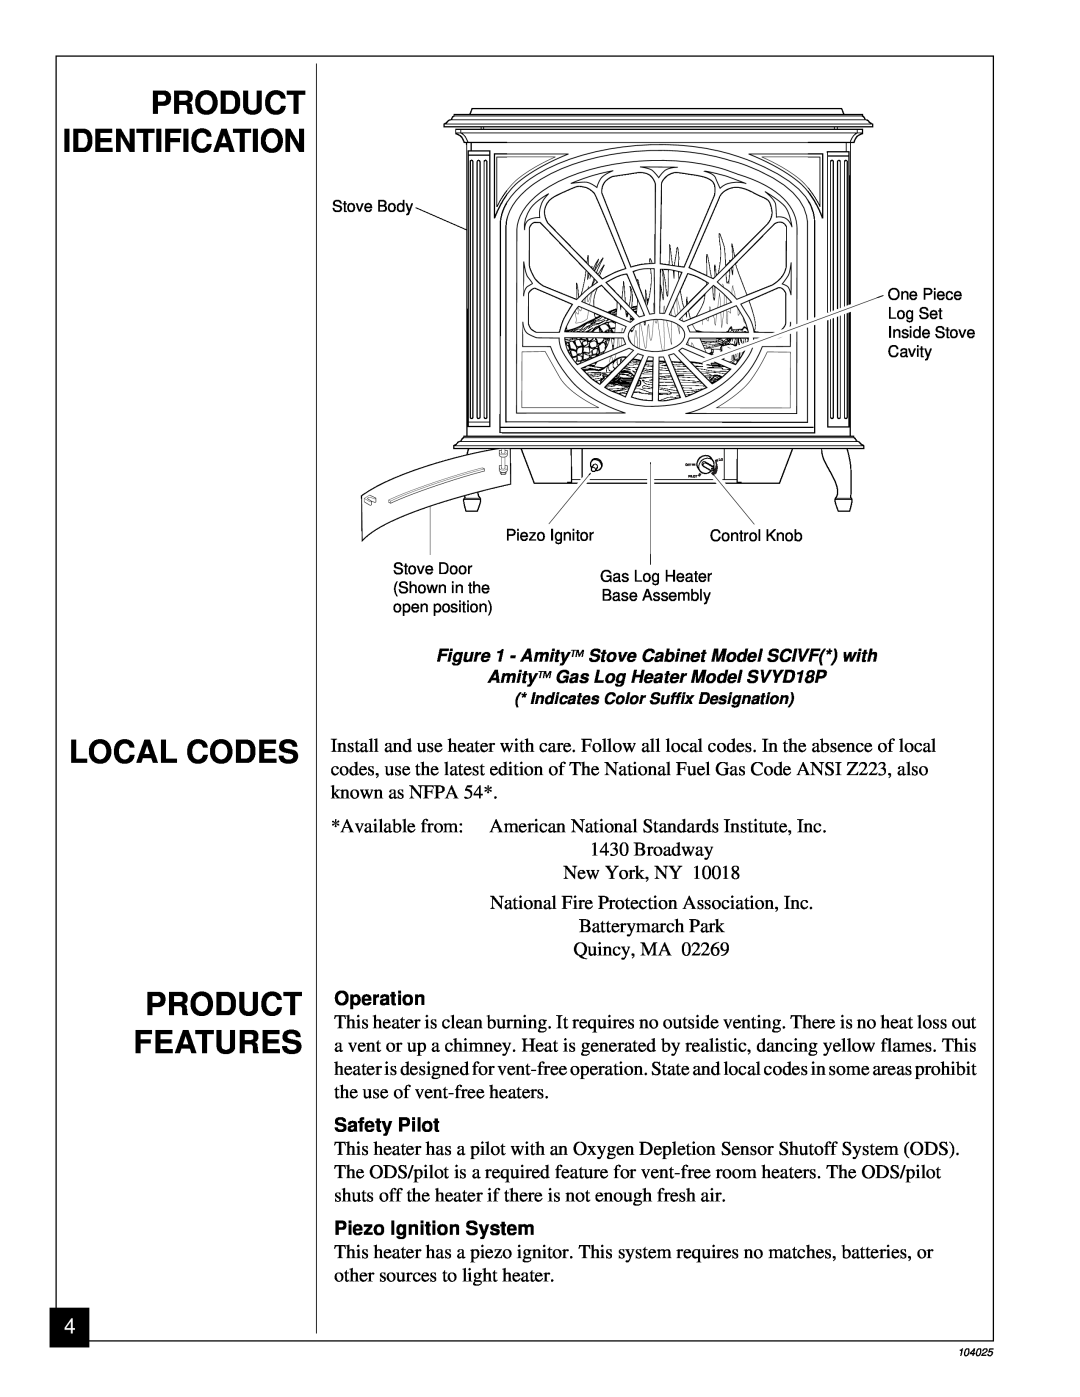 Desa SCIVFB, SCIVFR, SCIVFG, SCIVFC installation manual Local Codes Product Features, Product Identification 